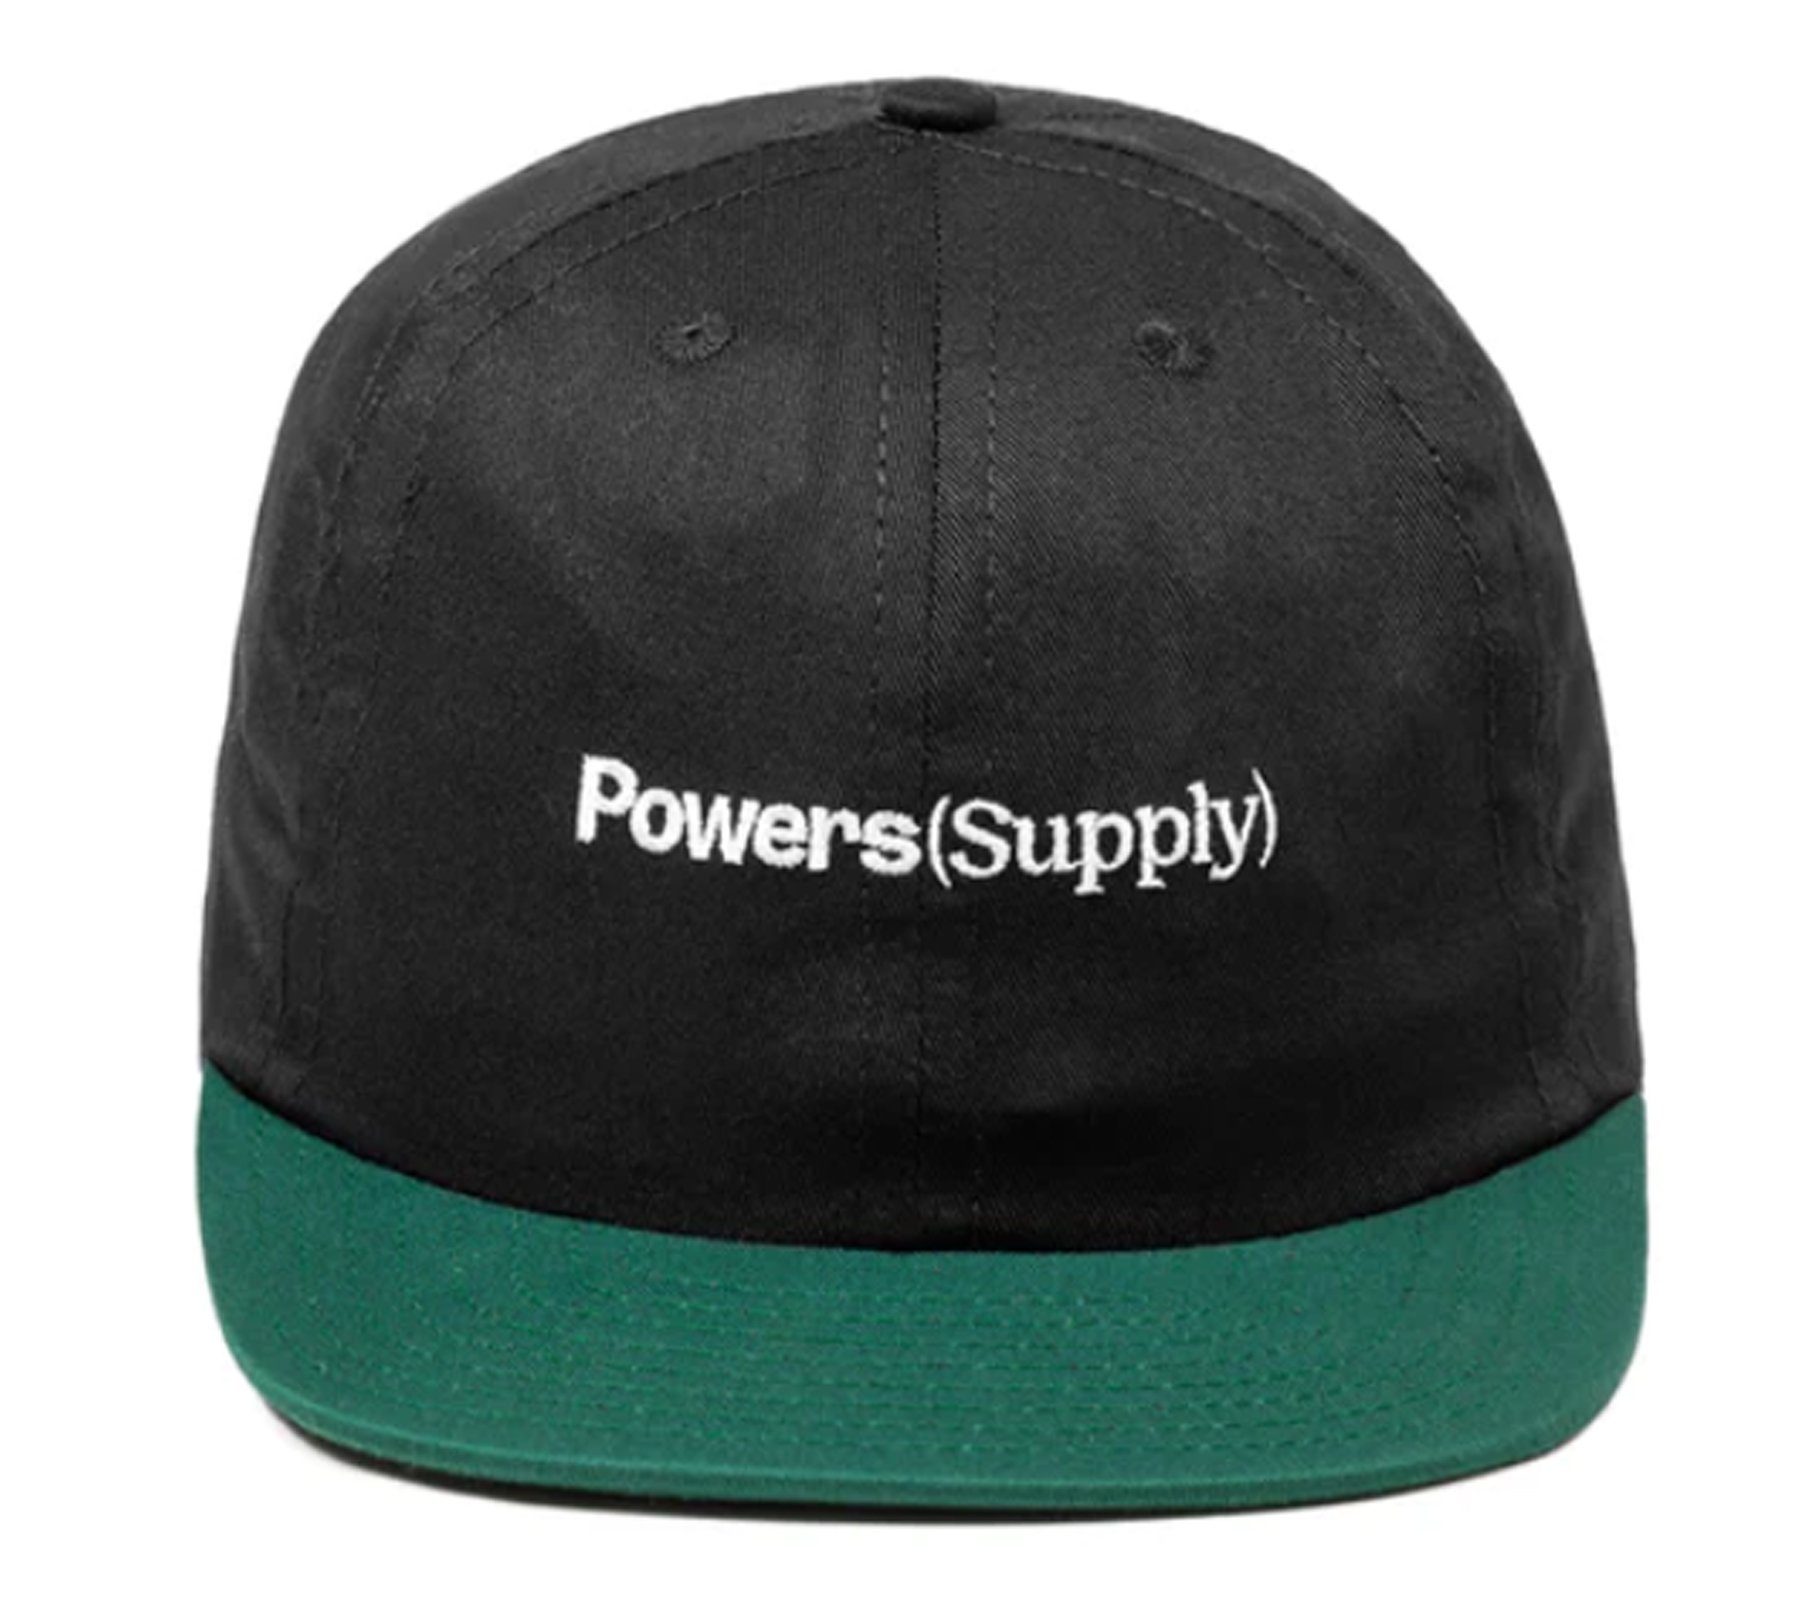 Powers Baseball Herren Cap Mütze Schwarz/Grün New the Logo Supply USA Powers 6-Panel Made in Basecap Cap verstellbare